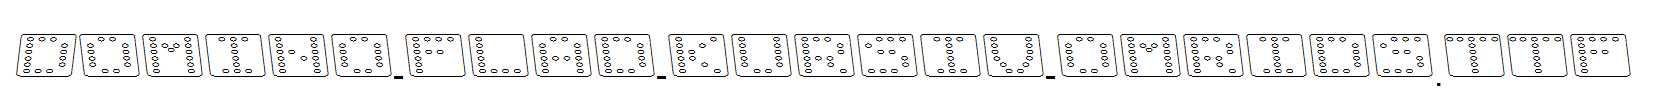 Domino-flad-kursiv-omrids